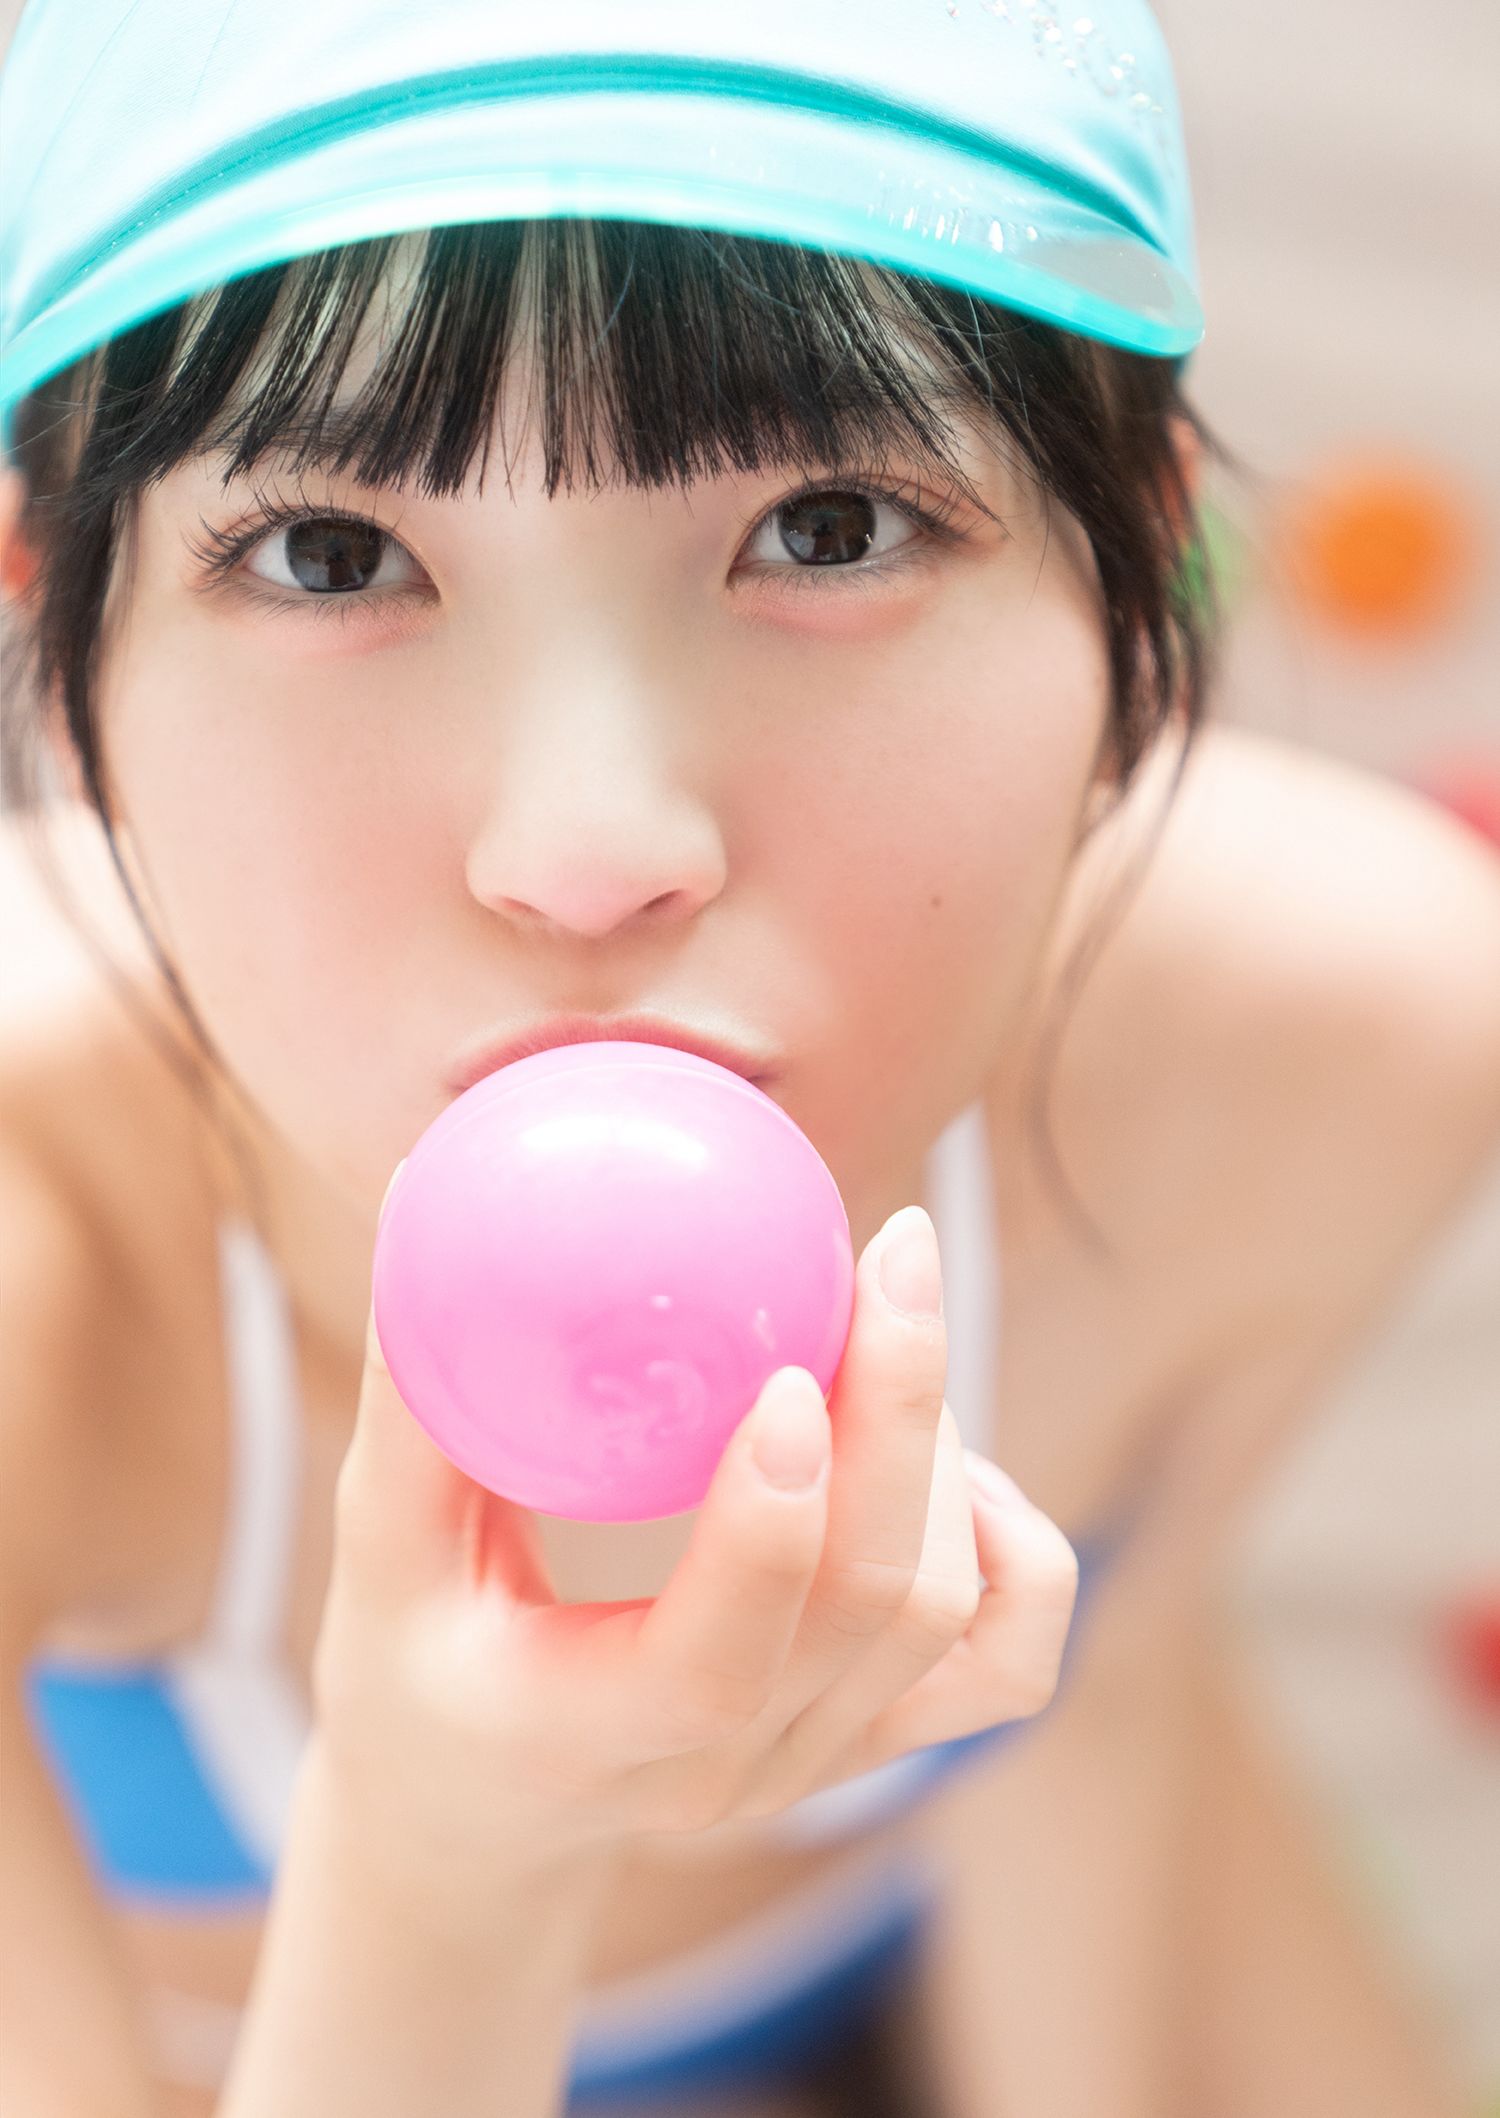 [photobook] 由良ゆら(#よーよーよー)写真集「“Azatoi”Summer Girl」/(51P)